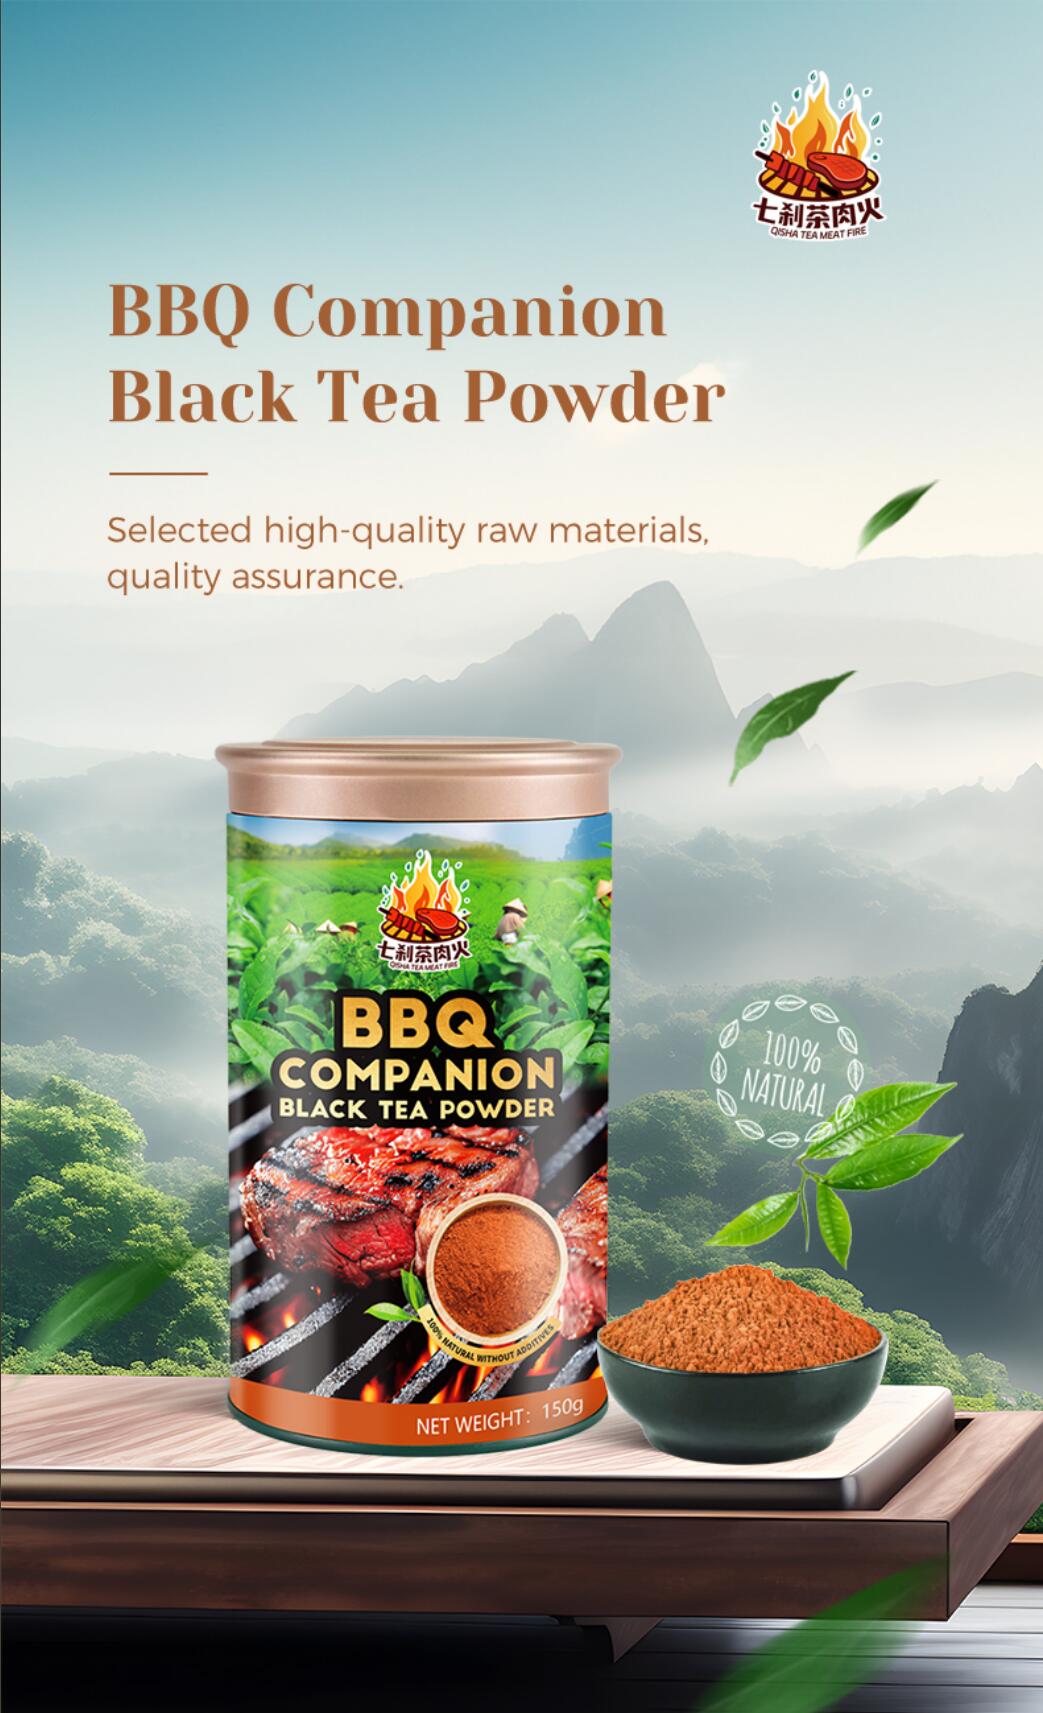 Chinese tea powder seasoning, the delicious secret of barbecue seasoning插图